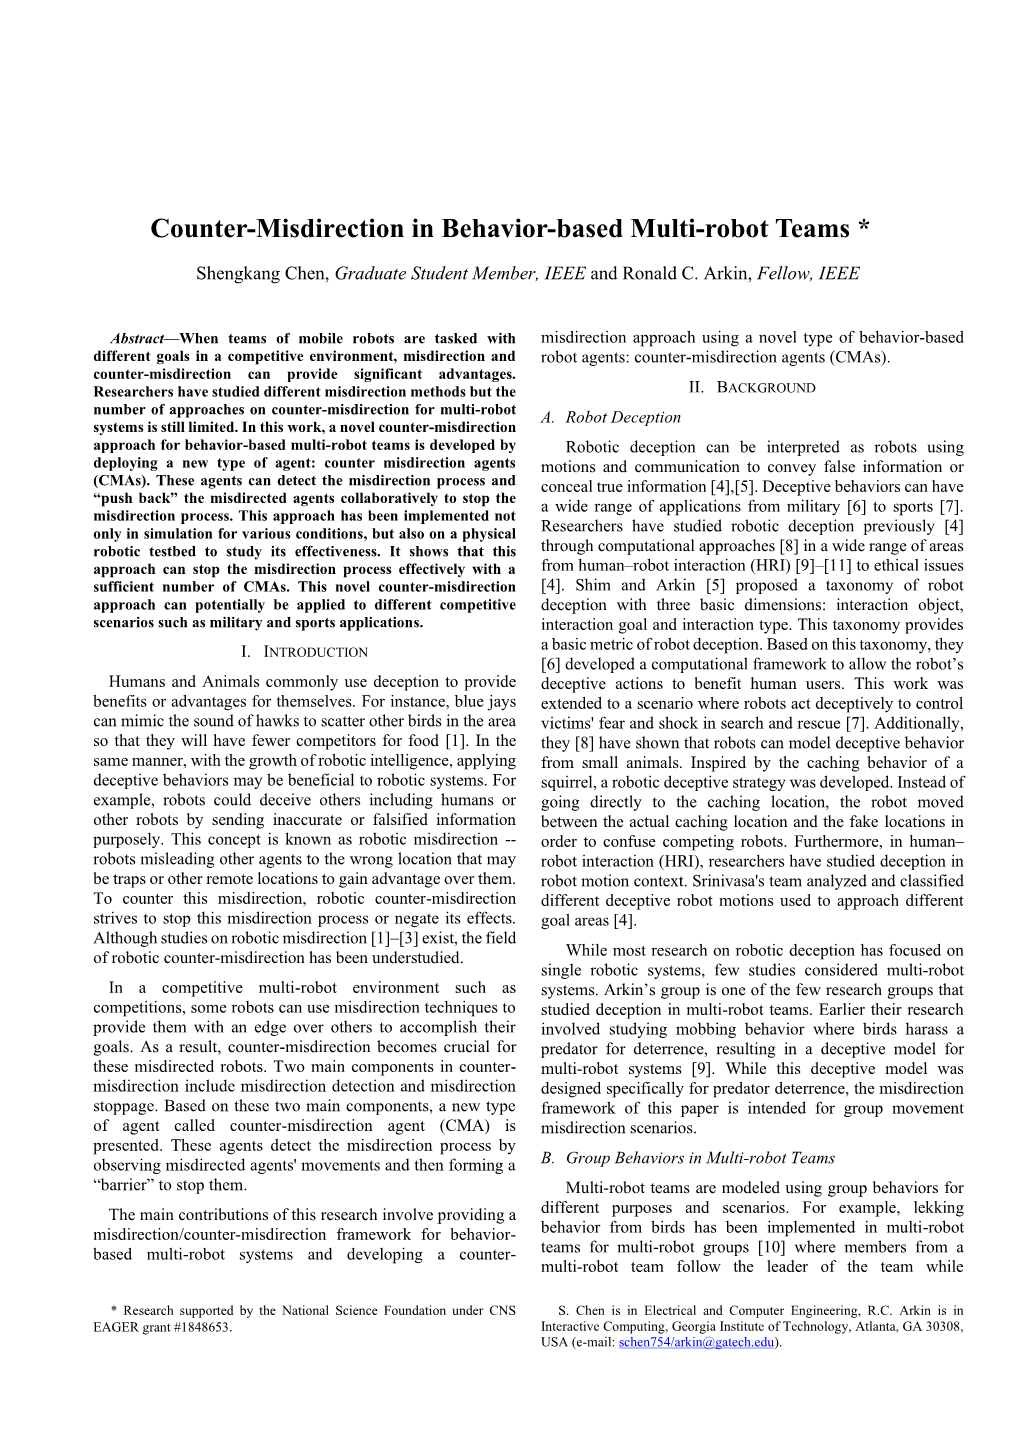 Counter-Misdirection in Behavior-Based Multi-Robot Teams *